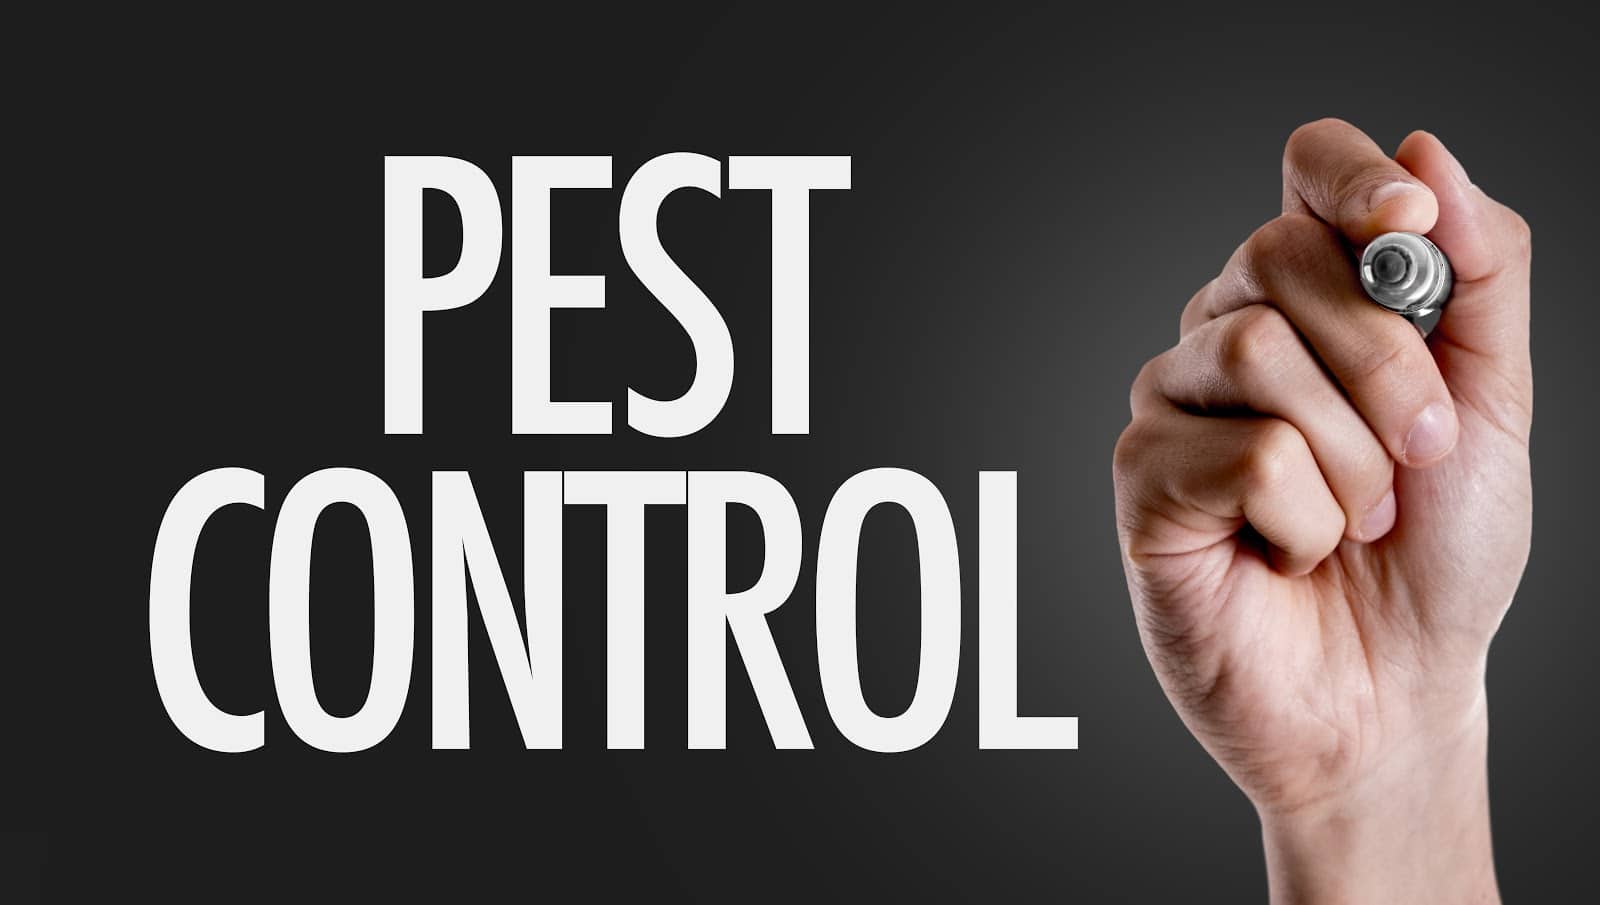 Pest control marketing